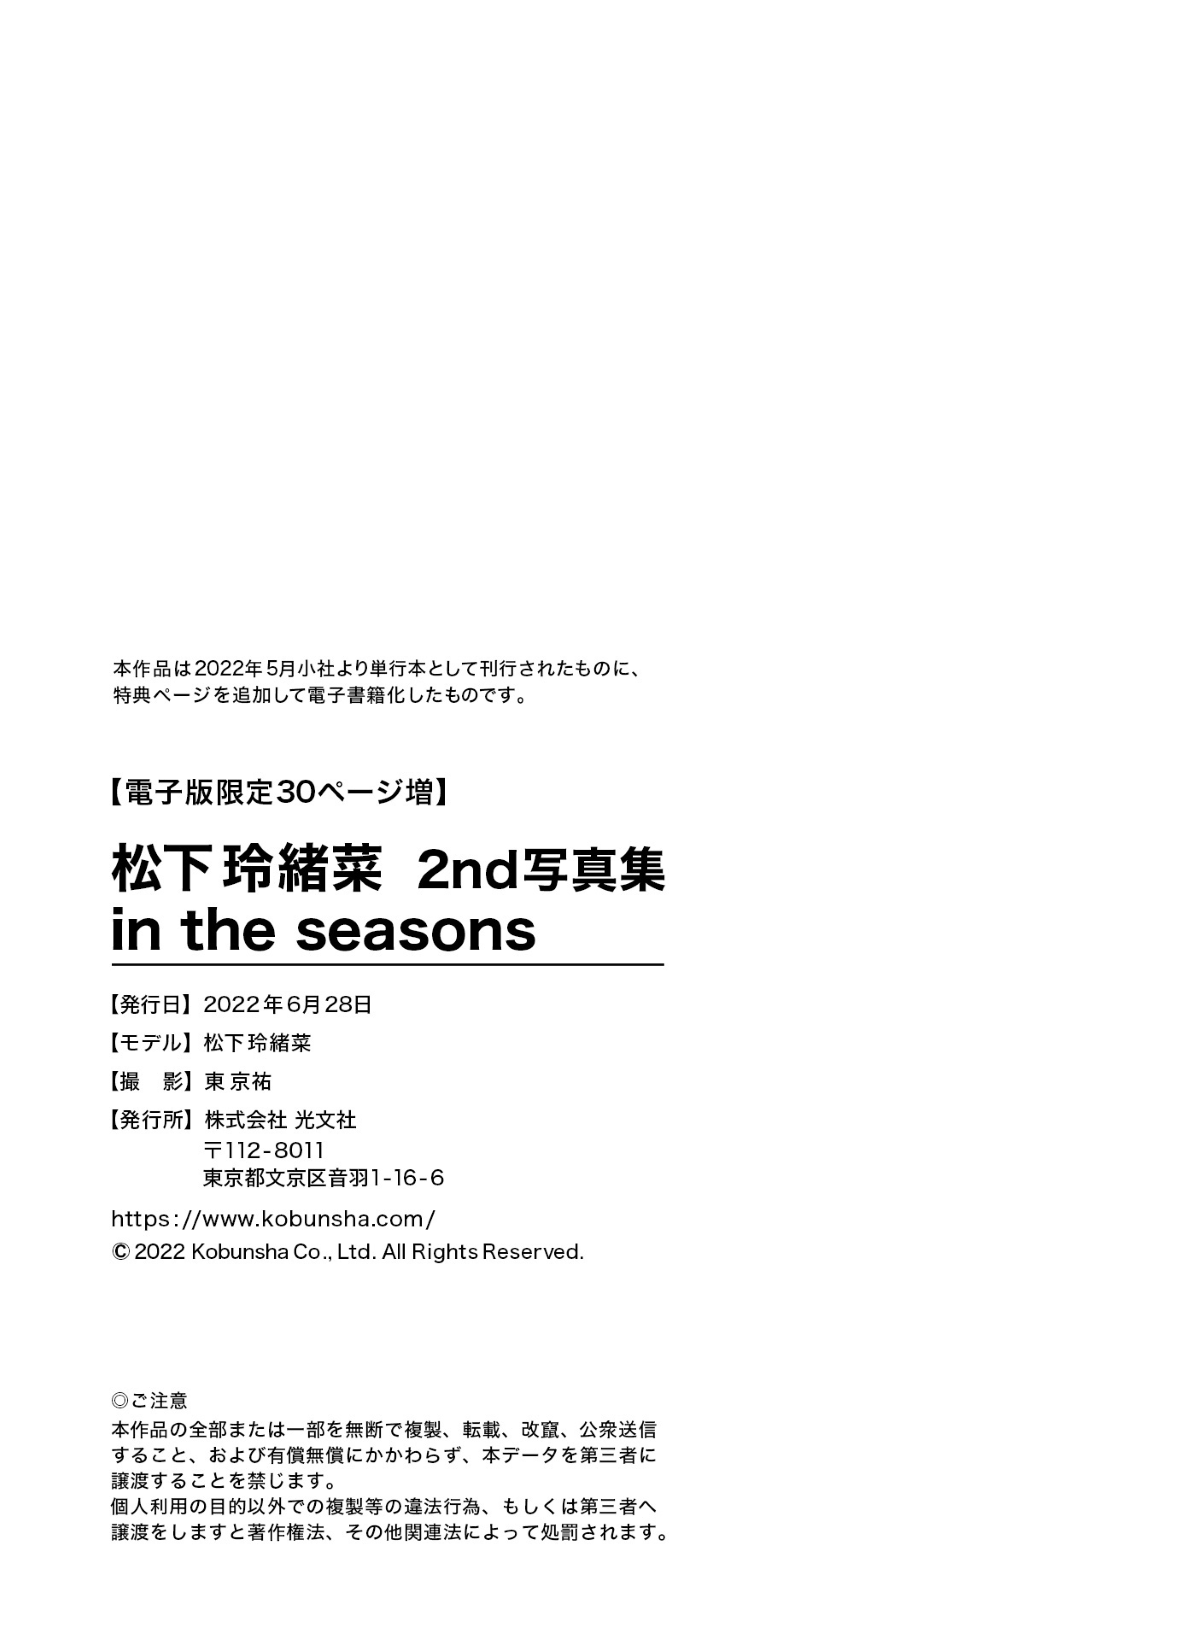 Photobook 松下玲緒菜2nd写真集 in the seasons 0163 8859594701.png